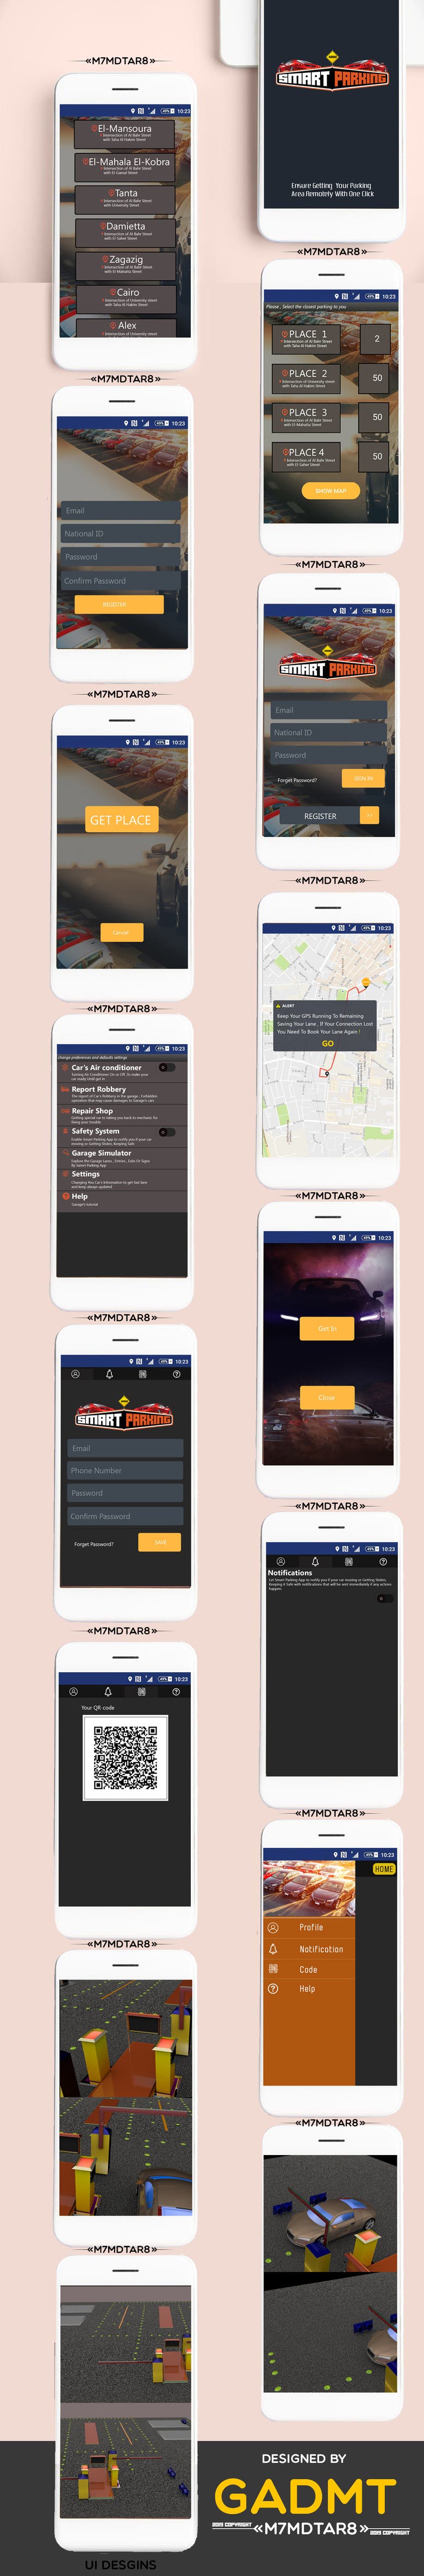 simple UI mobile application designs